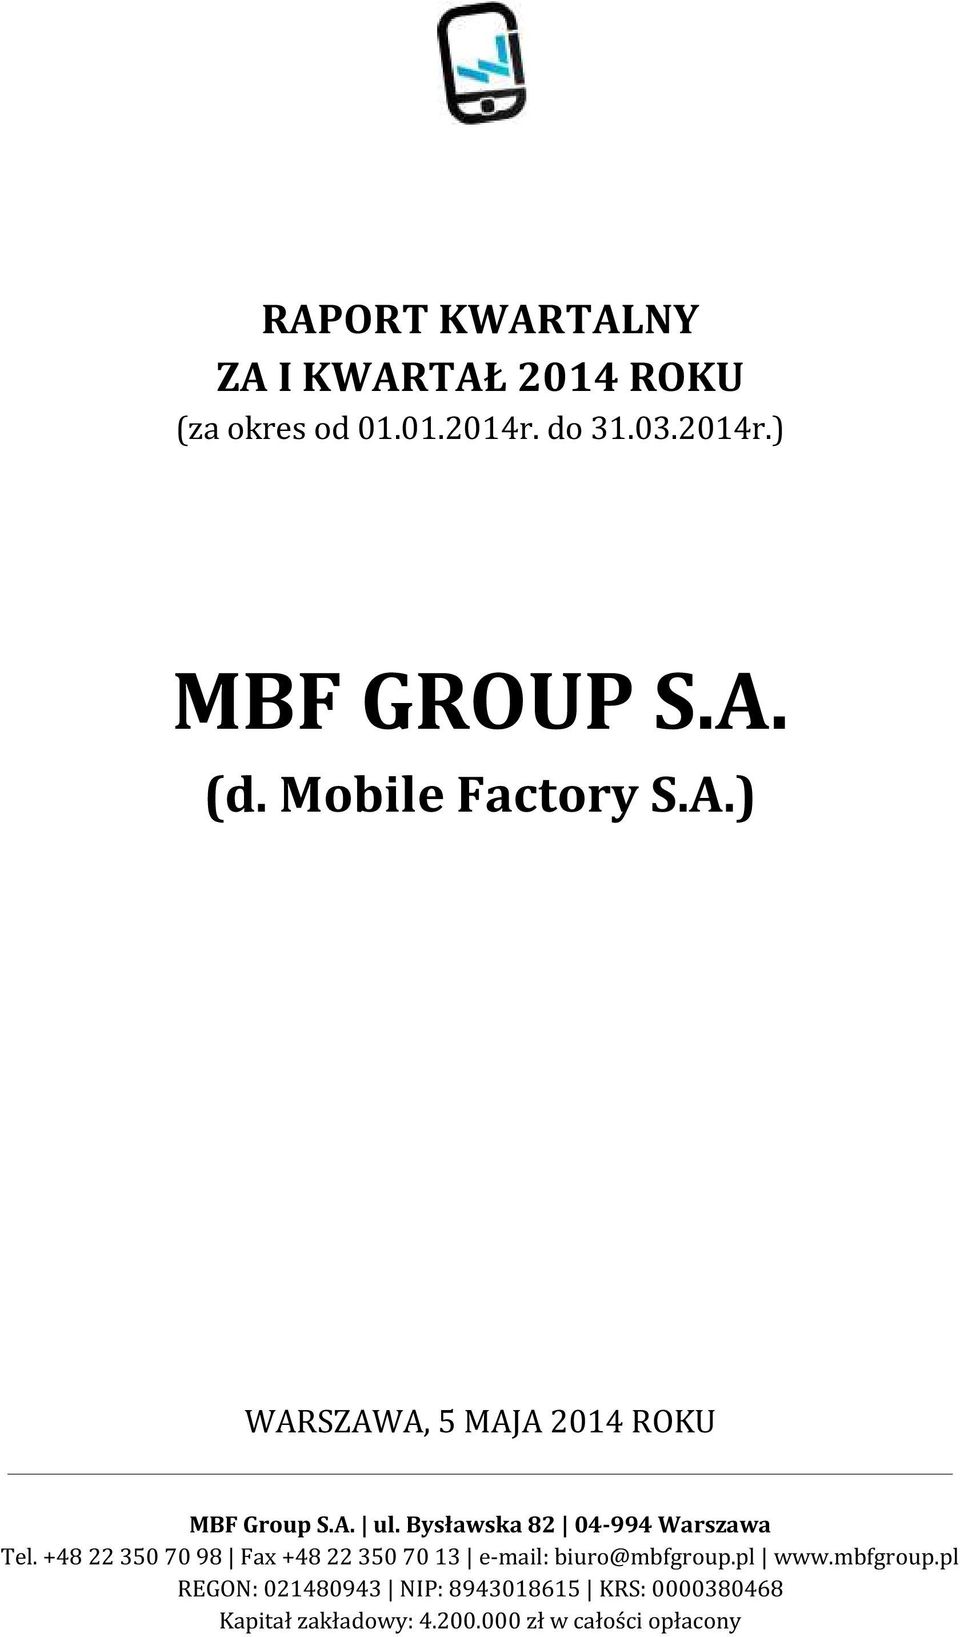 +48 22 350 70 98 Fax +48 22 350 70 13 e-mail: biuro@mbfgroup.